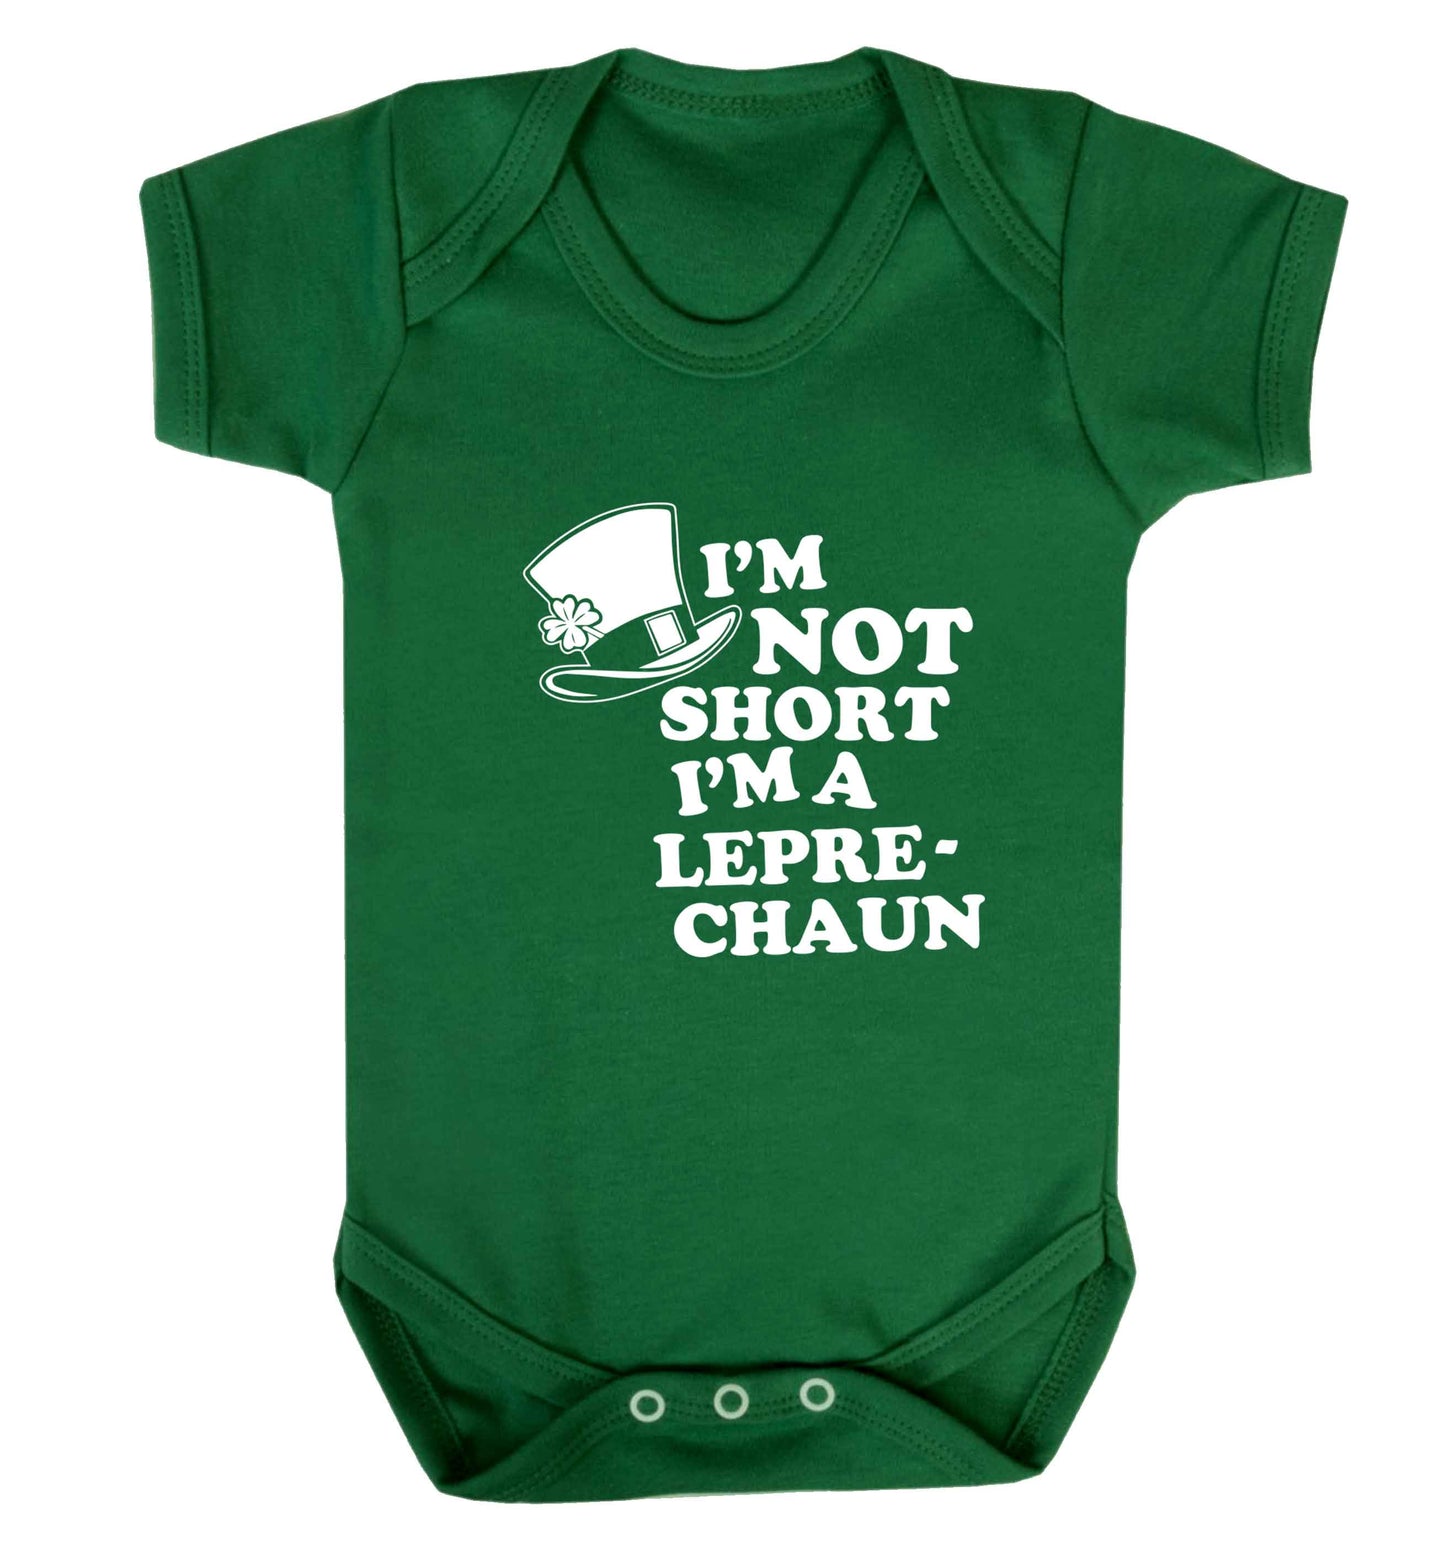 I'm not short I'm a leprechaun baby vest green 18-24 months